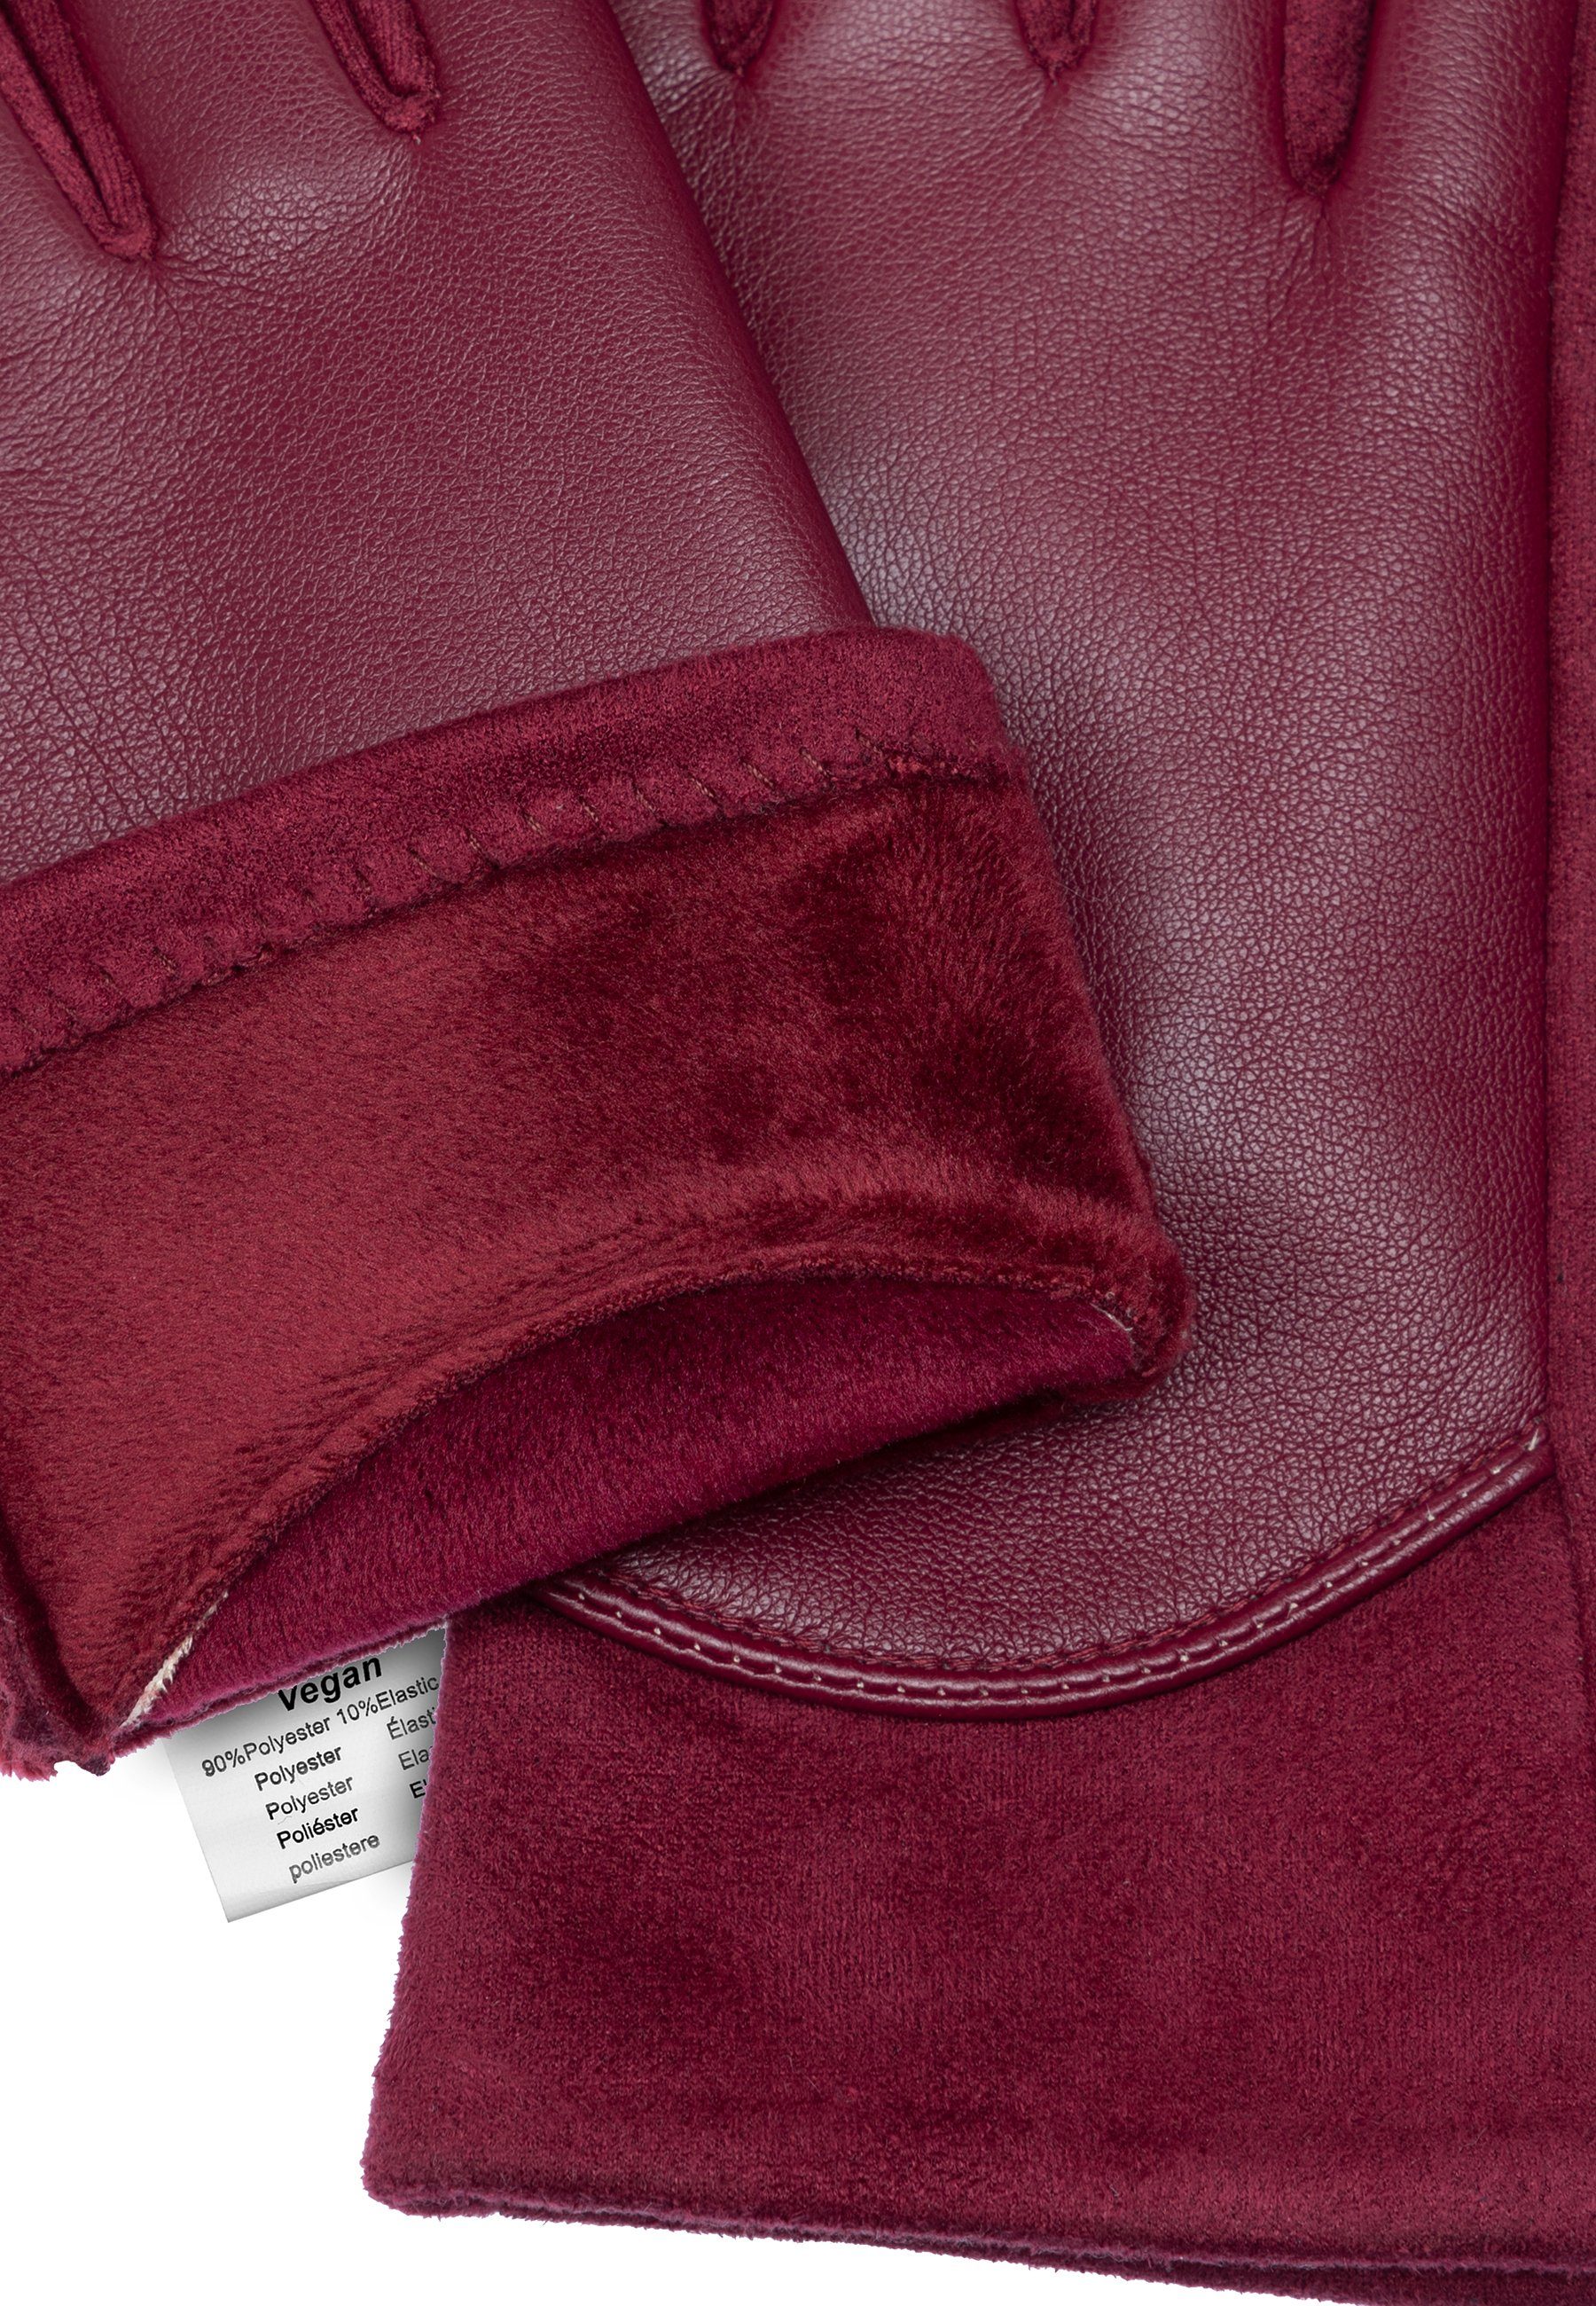 Caspar Strickhandschuhe GLV016 klassisch elegante weinrot Damen Handschuhe uni